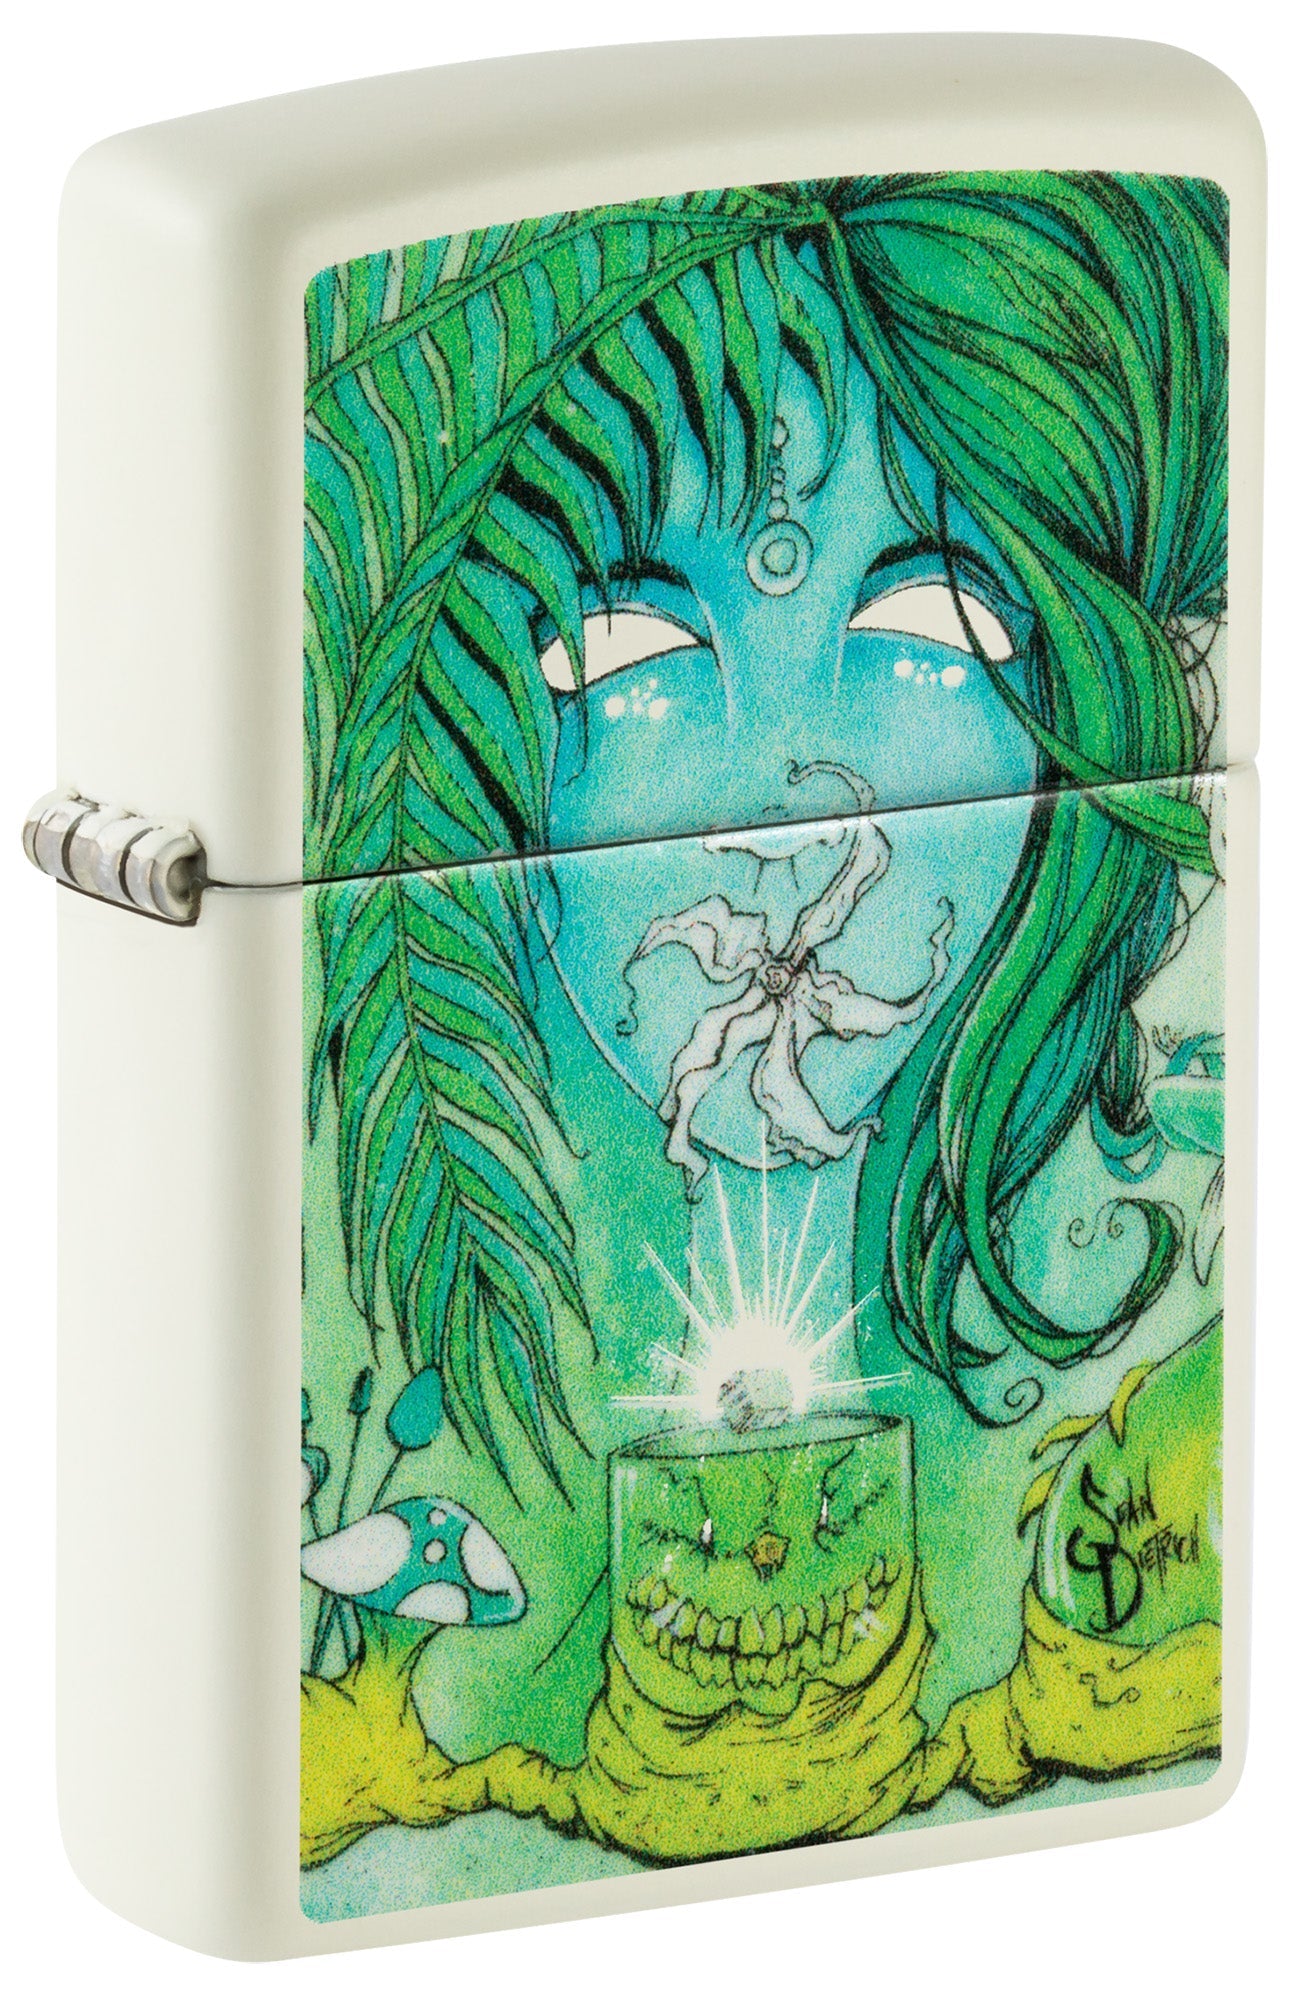 Zippo Lighter: Sugar Cube by Sean Dietrich - Glow-in-the-Dark Green 48995